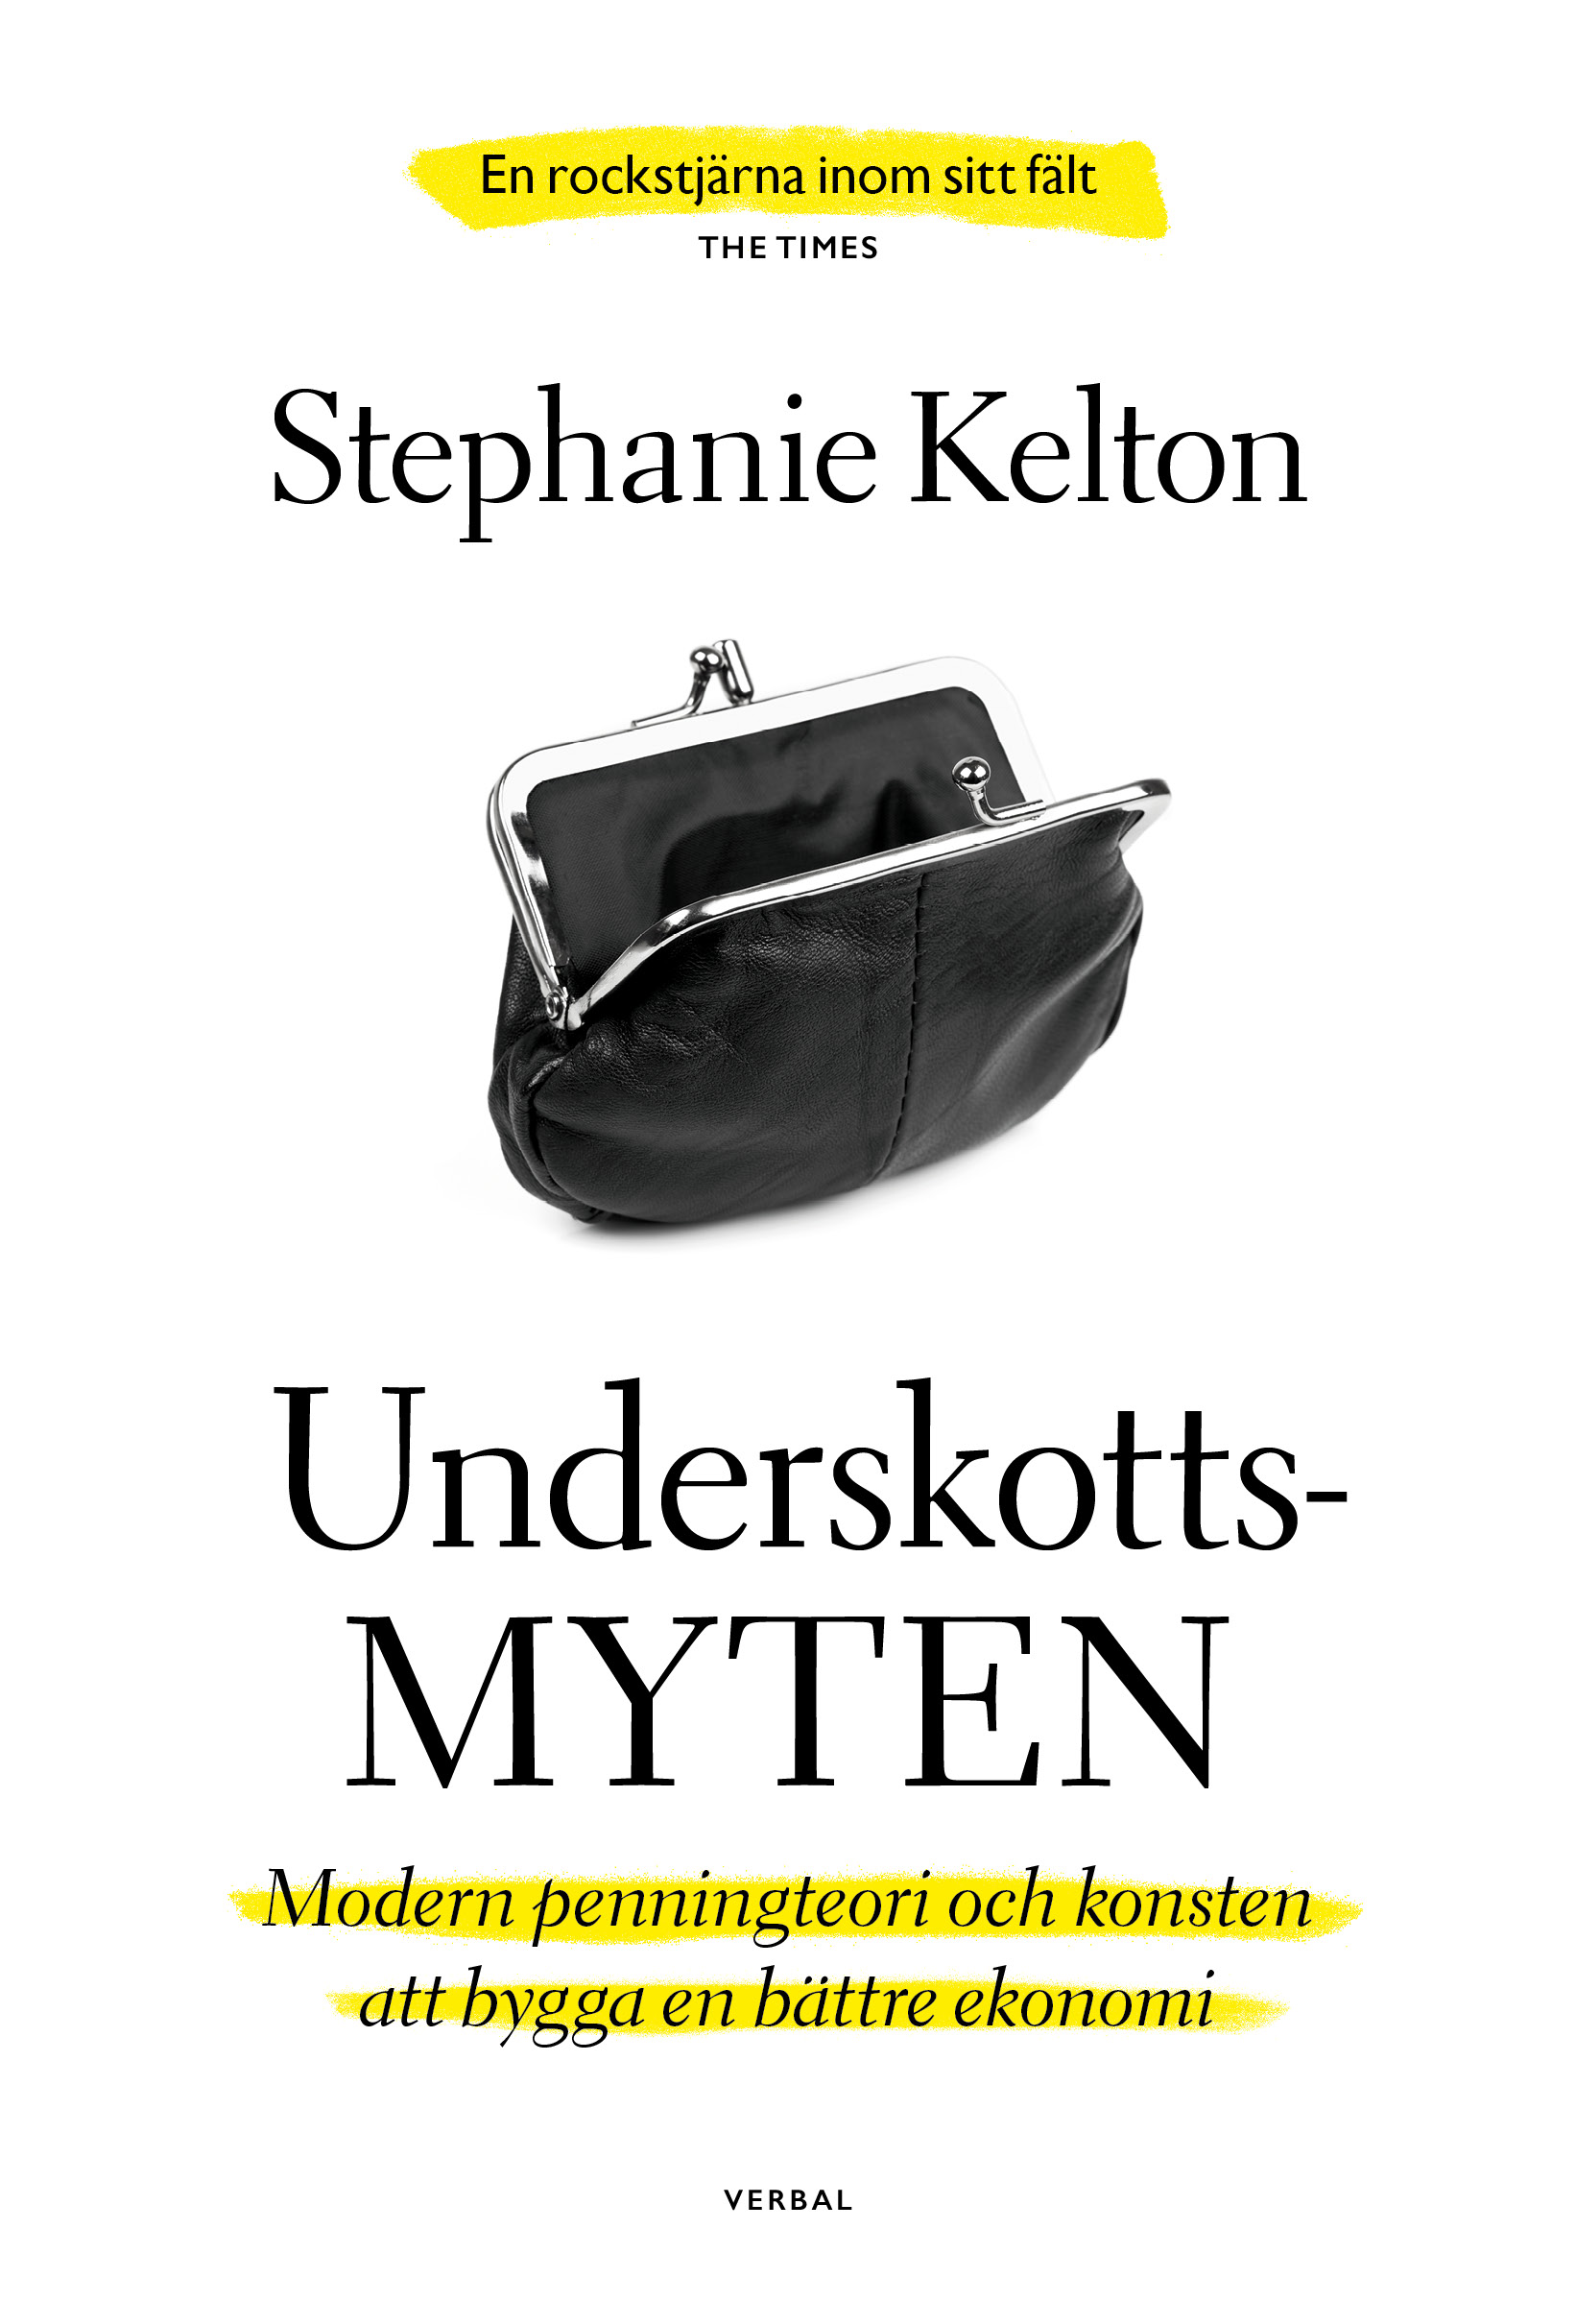 Stephanie Kelton i Stockholm